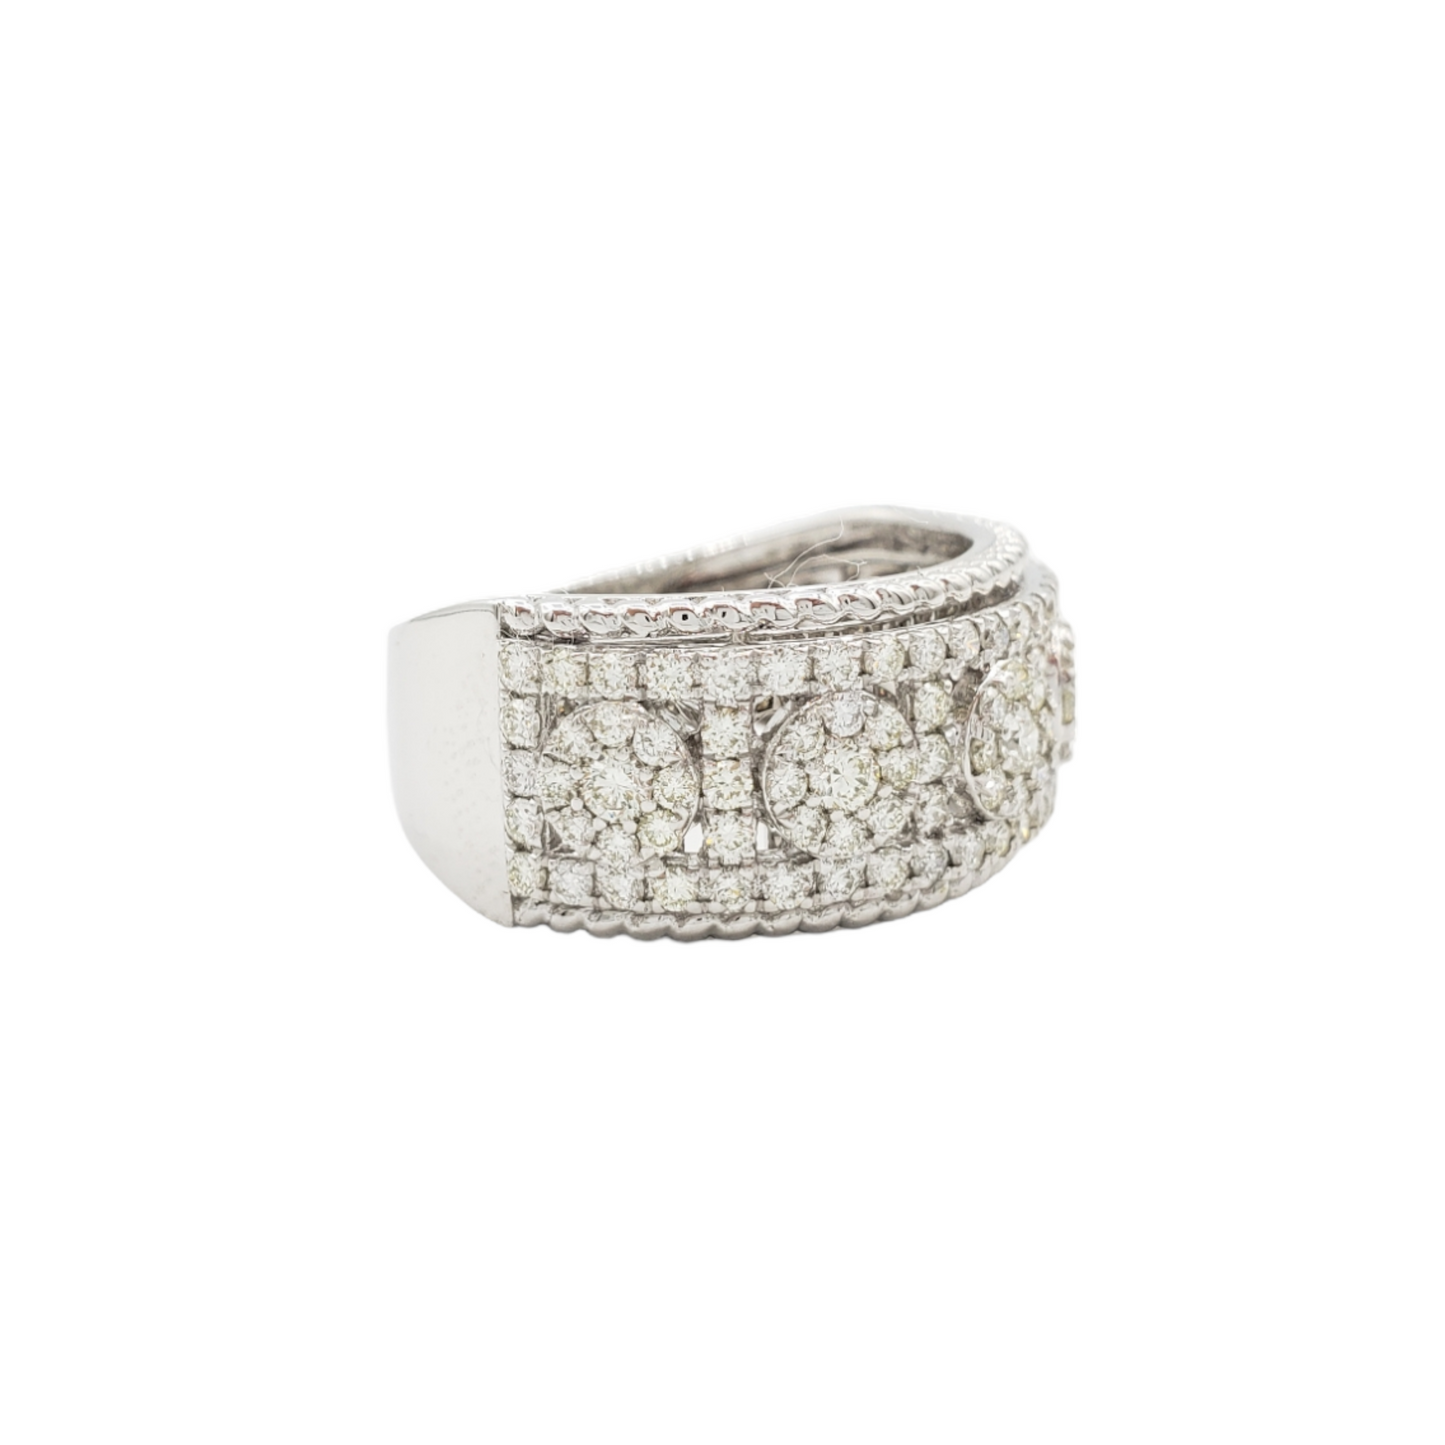 14k Diamond Ring With 1.64 Carats Of Diamonds #16674